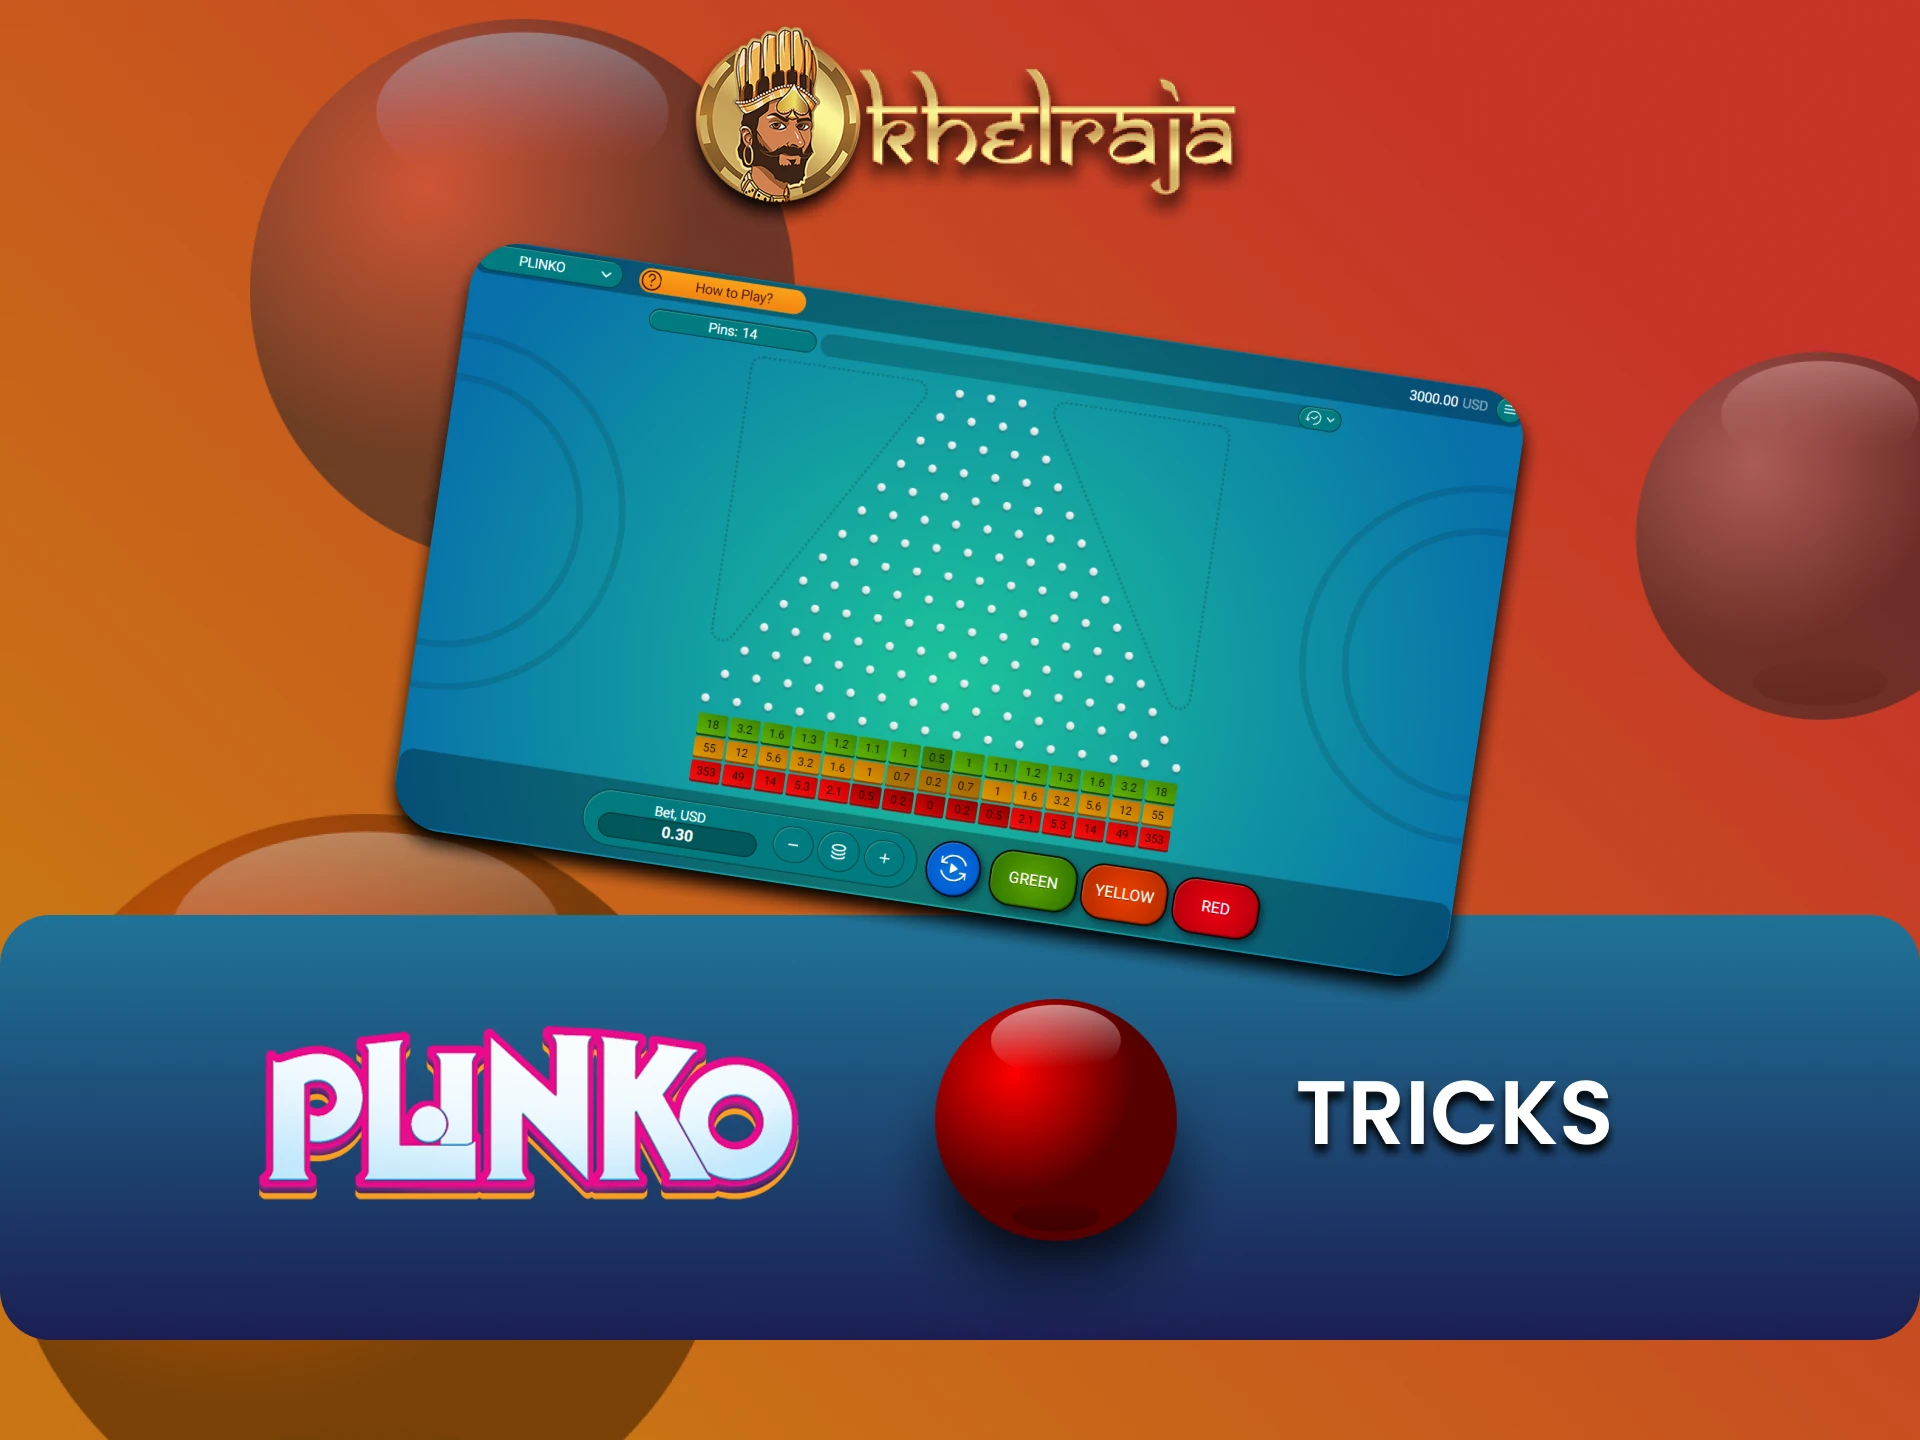 Learn tactics and tricks for Plinko on Khelraja.